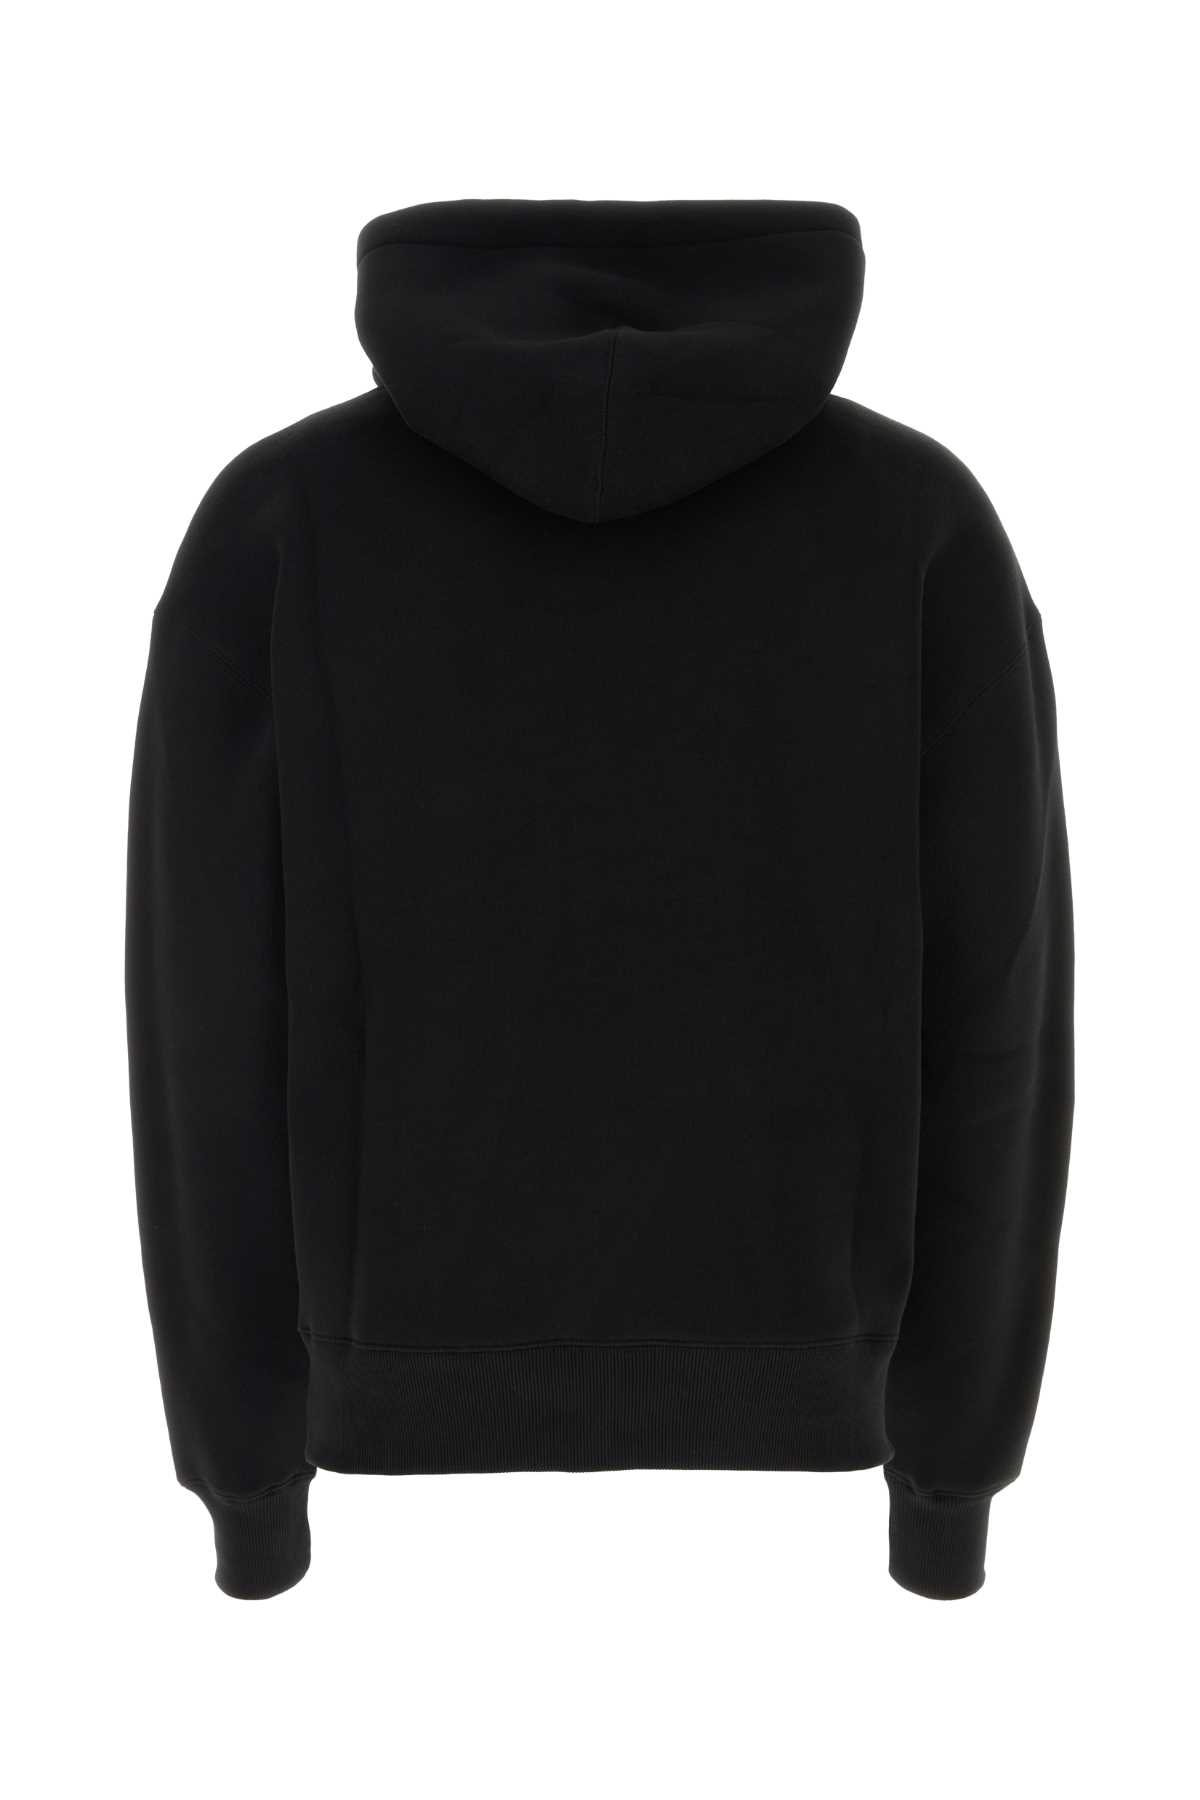 Shop Ami Alexandre Mattiussi Black Cotton Blend Sweatshirt